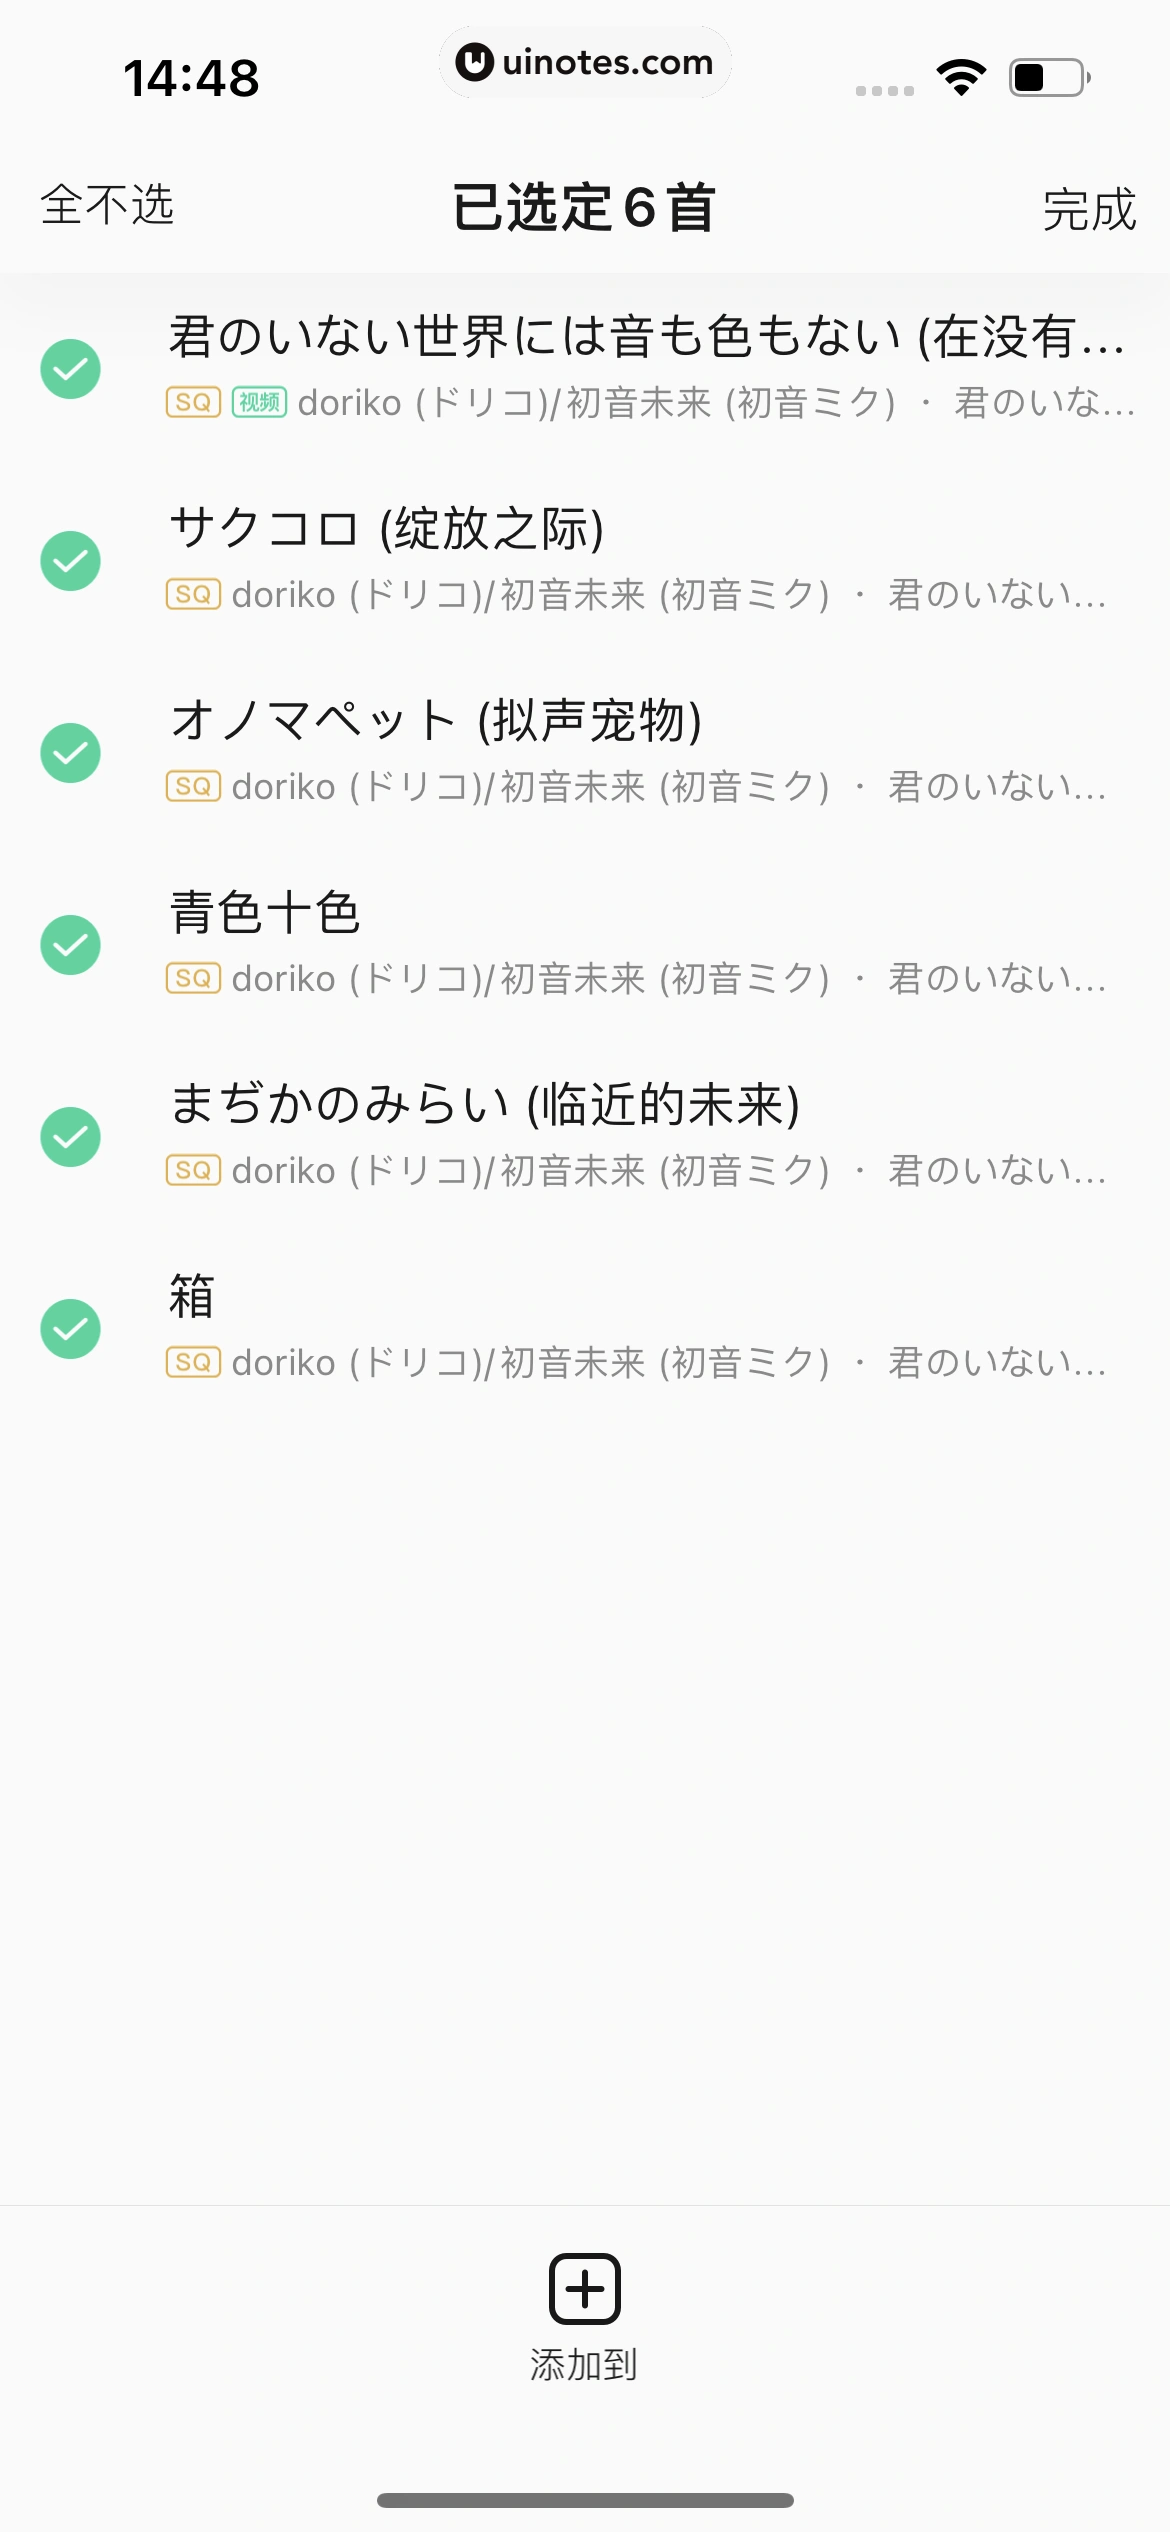 QQ音乐 App 截图 177 - UI Notes